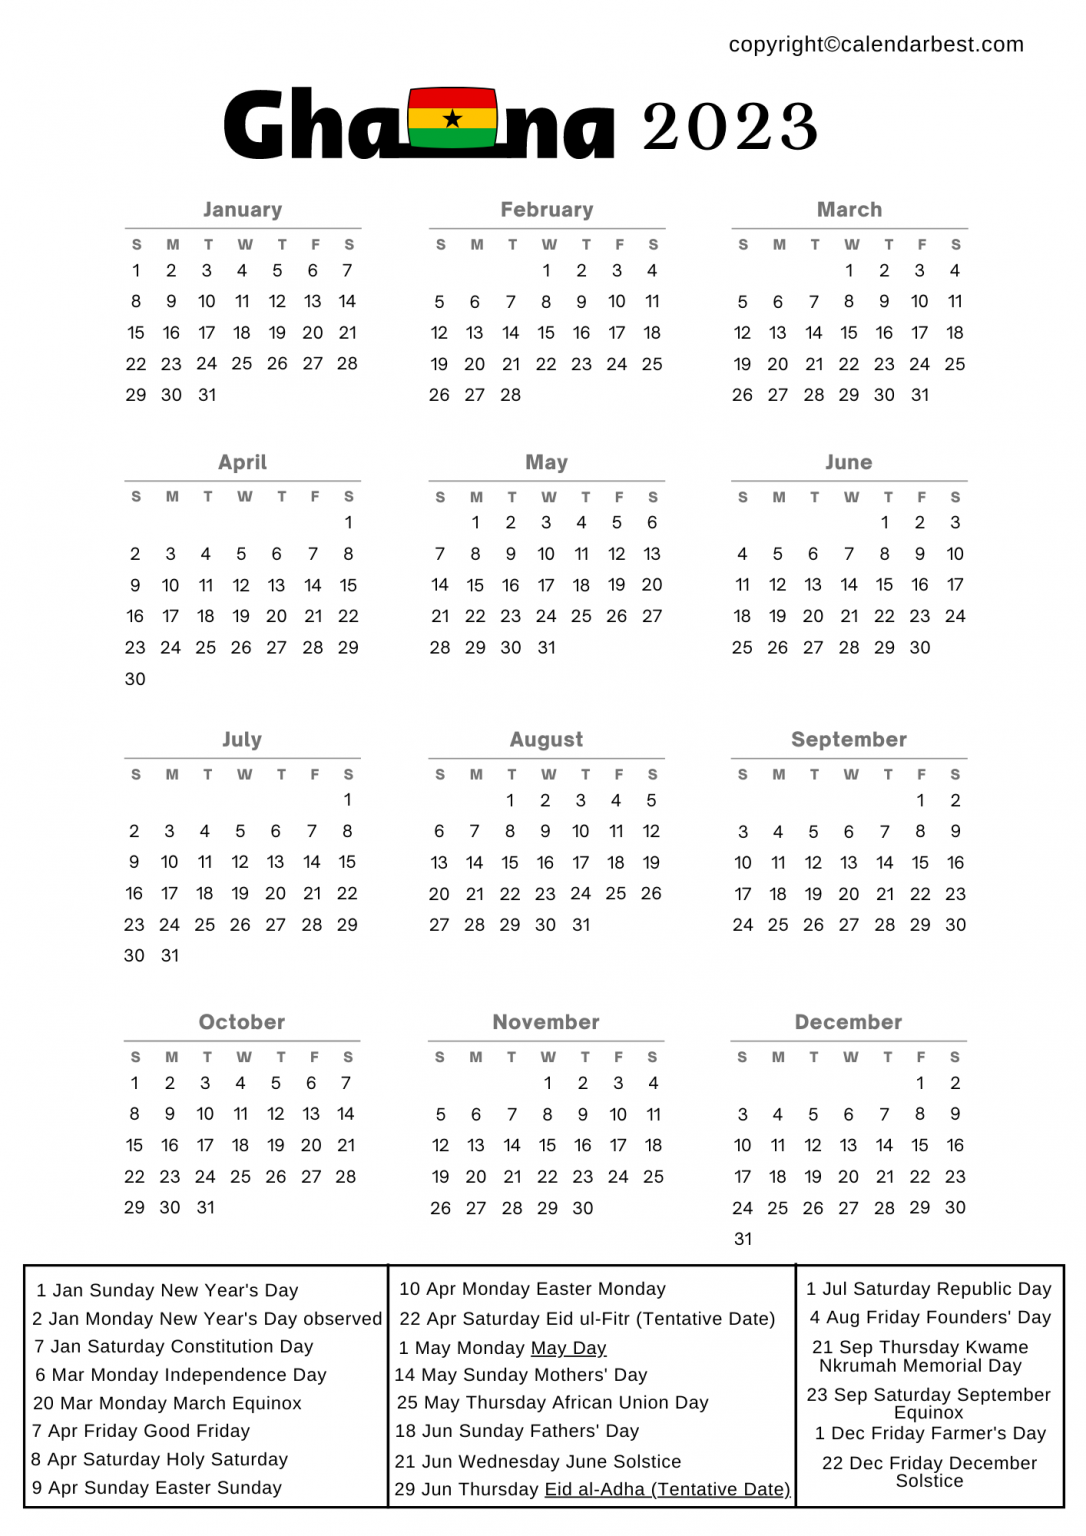 Ghana Calendar 2023 with Holidays Free Printable in PDF